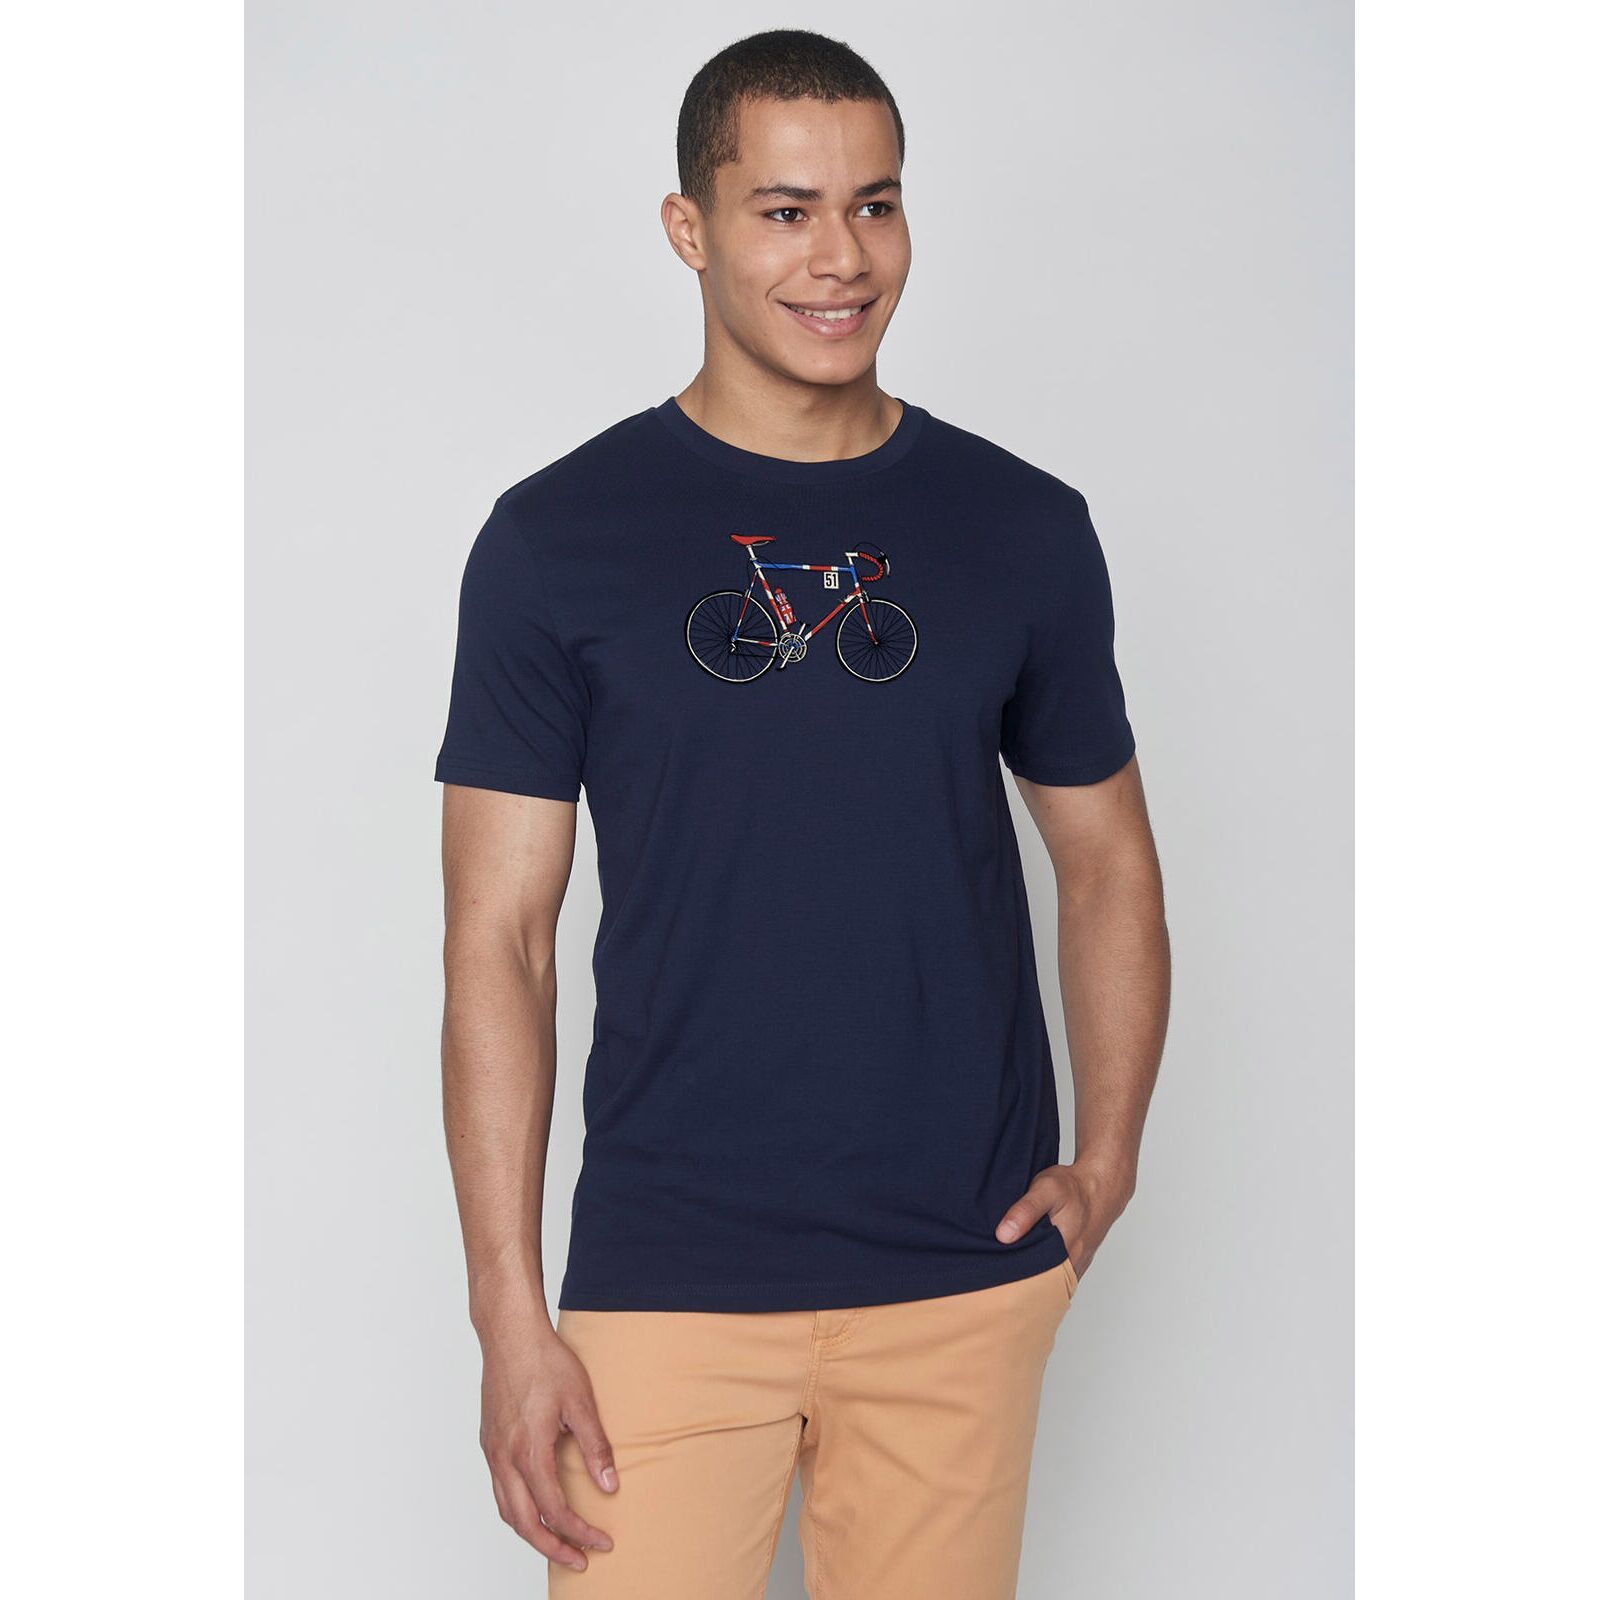 GREENBOMB Herren T-Shirt BIKE JACK Guide navy XS